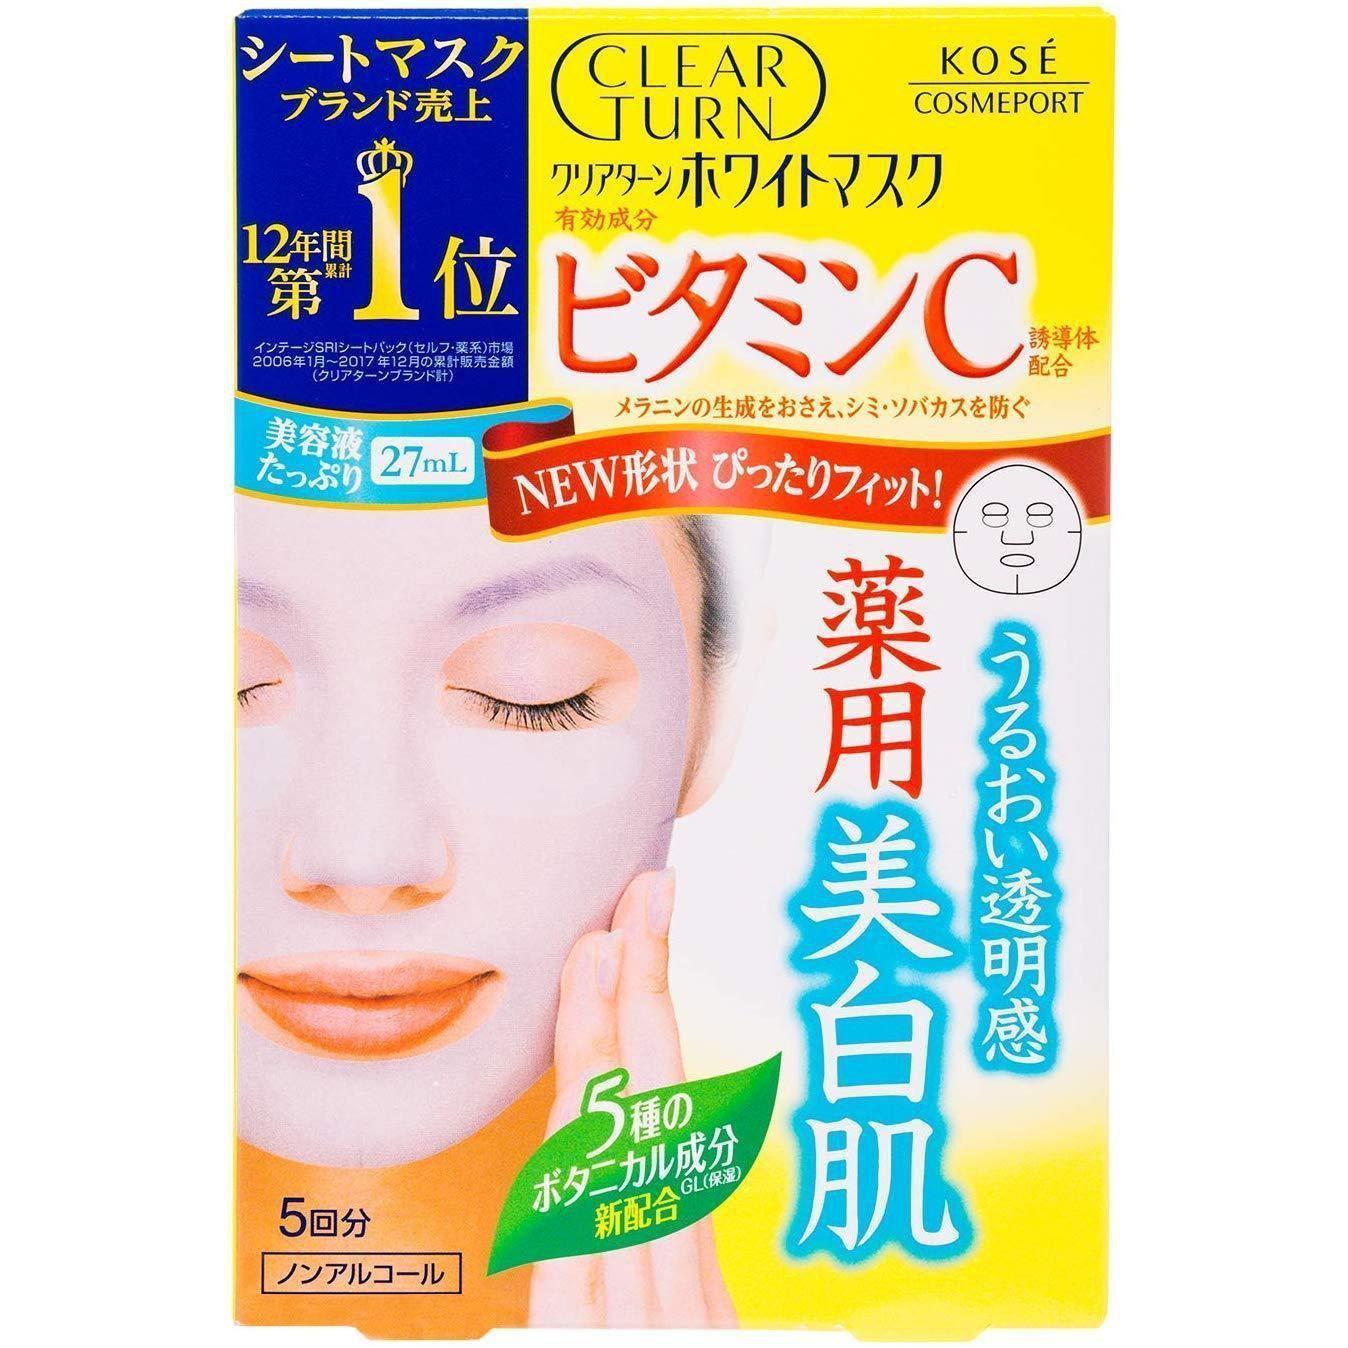 Kosé Clear Turn Mask Vitamin C 5 Masks